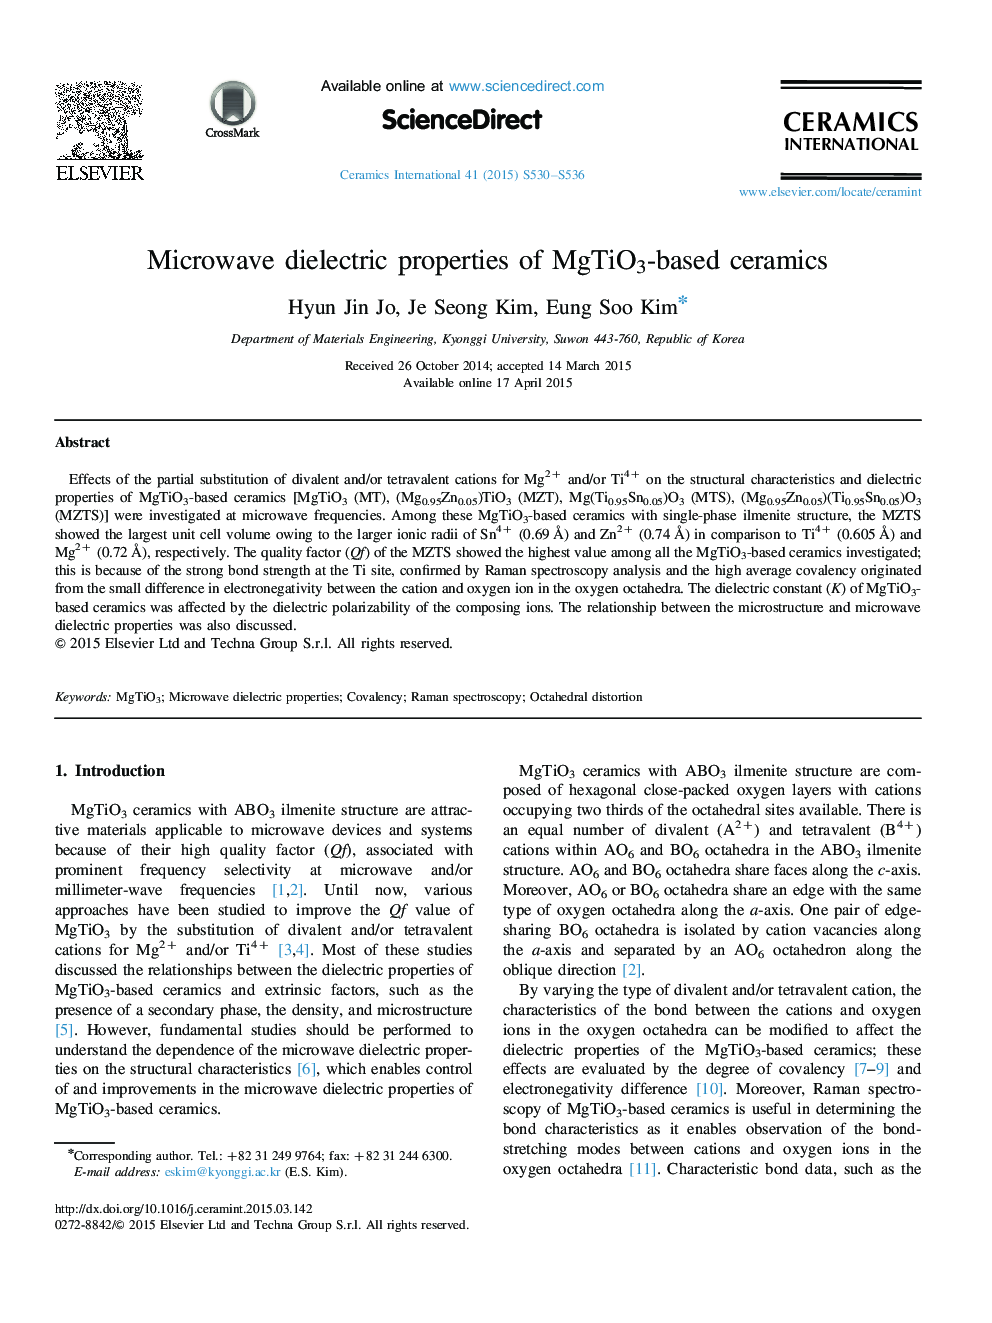 Microwave dielectric properties of MgTiO3-based ceramics